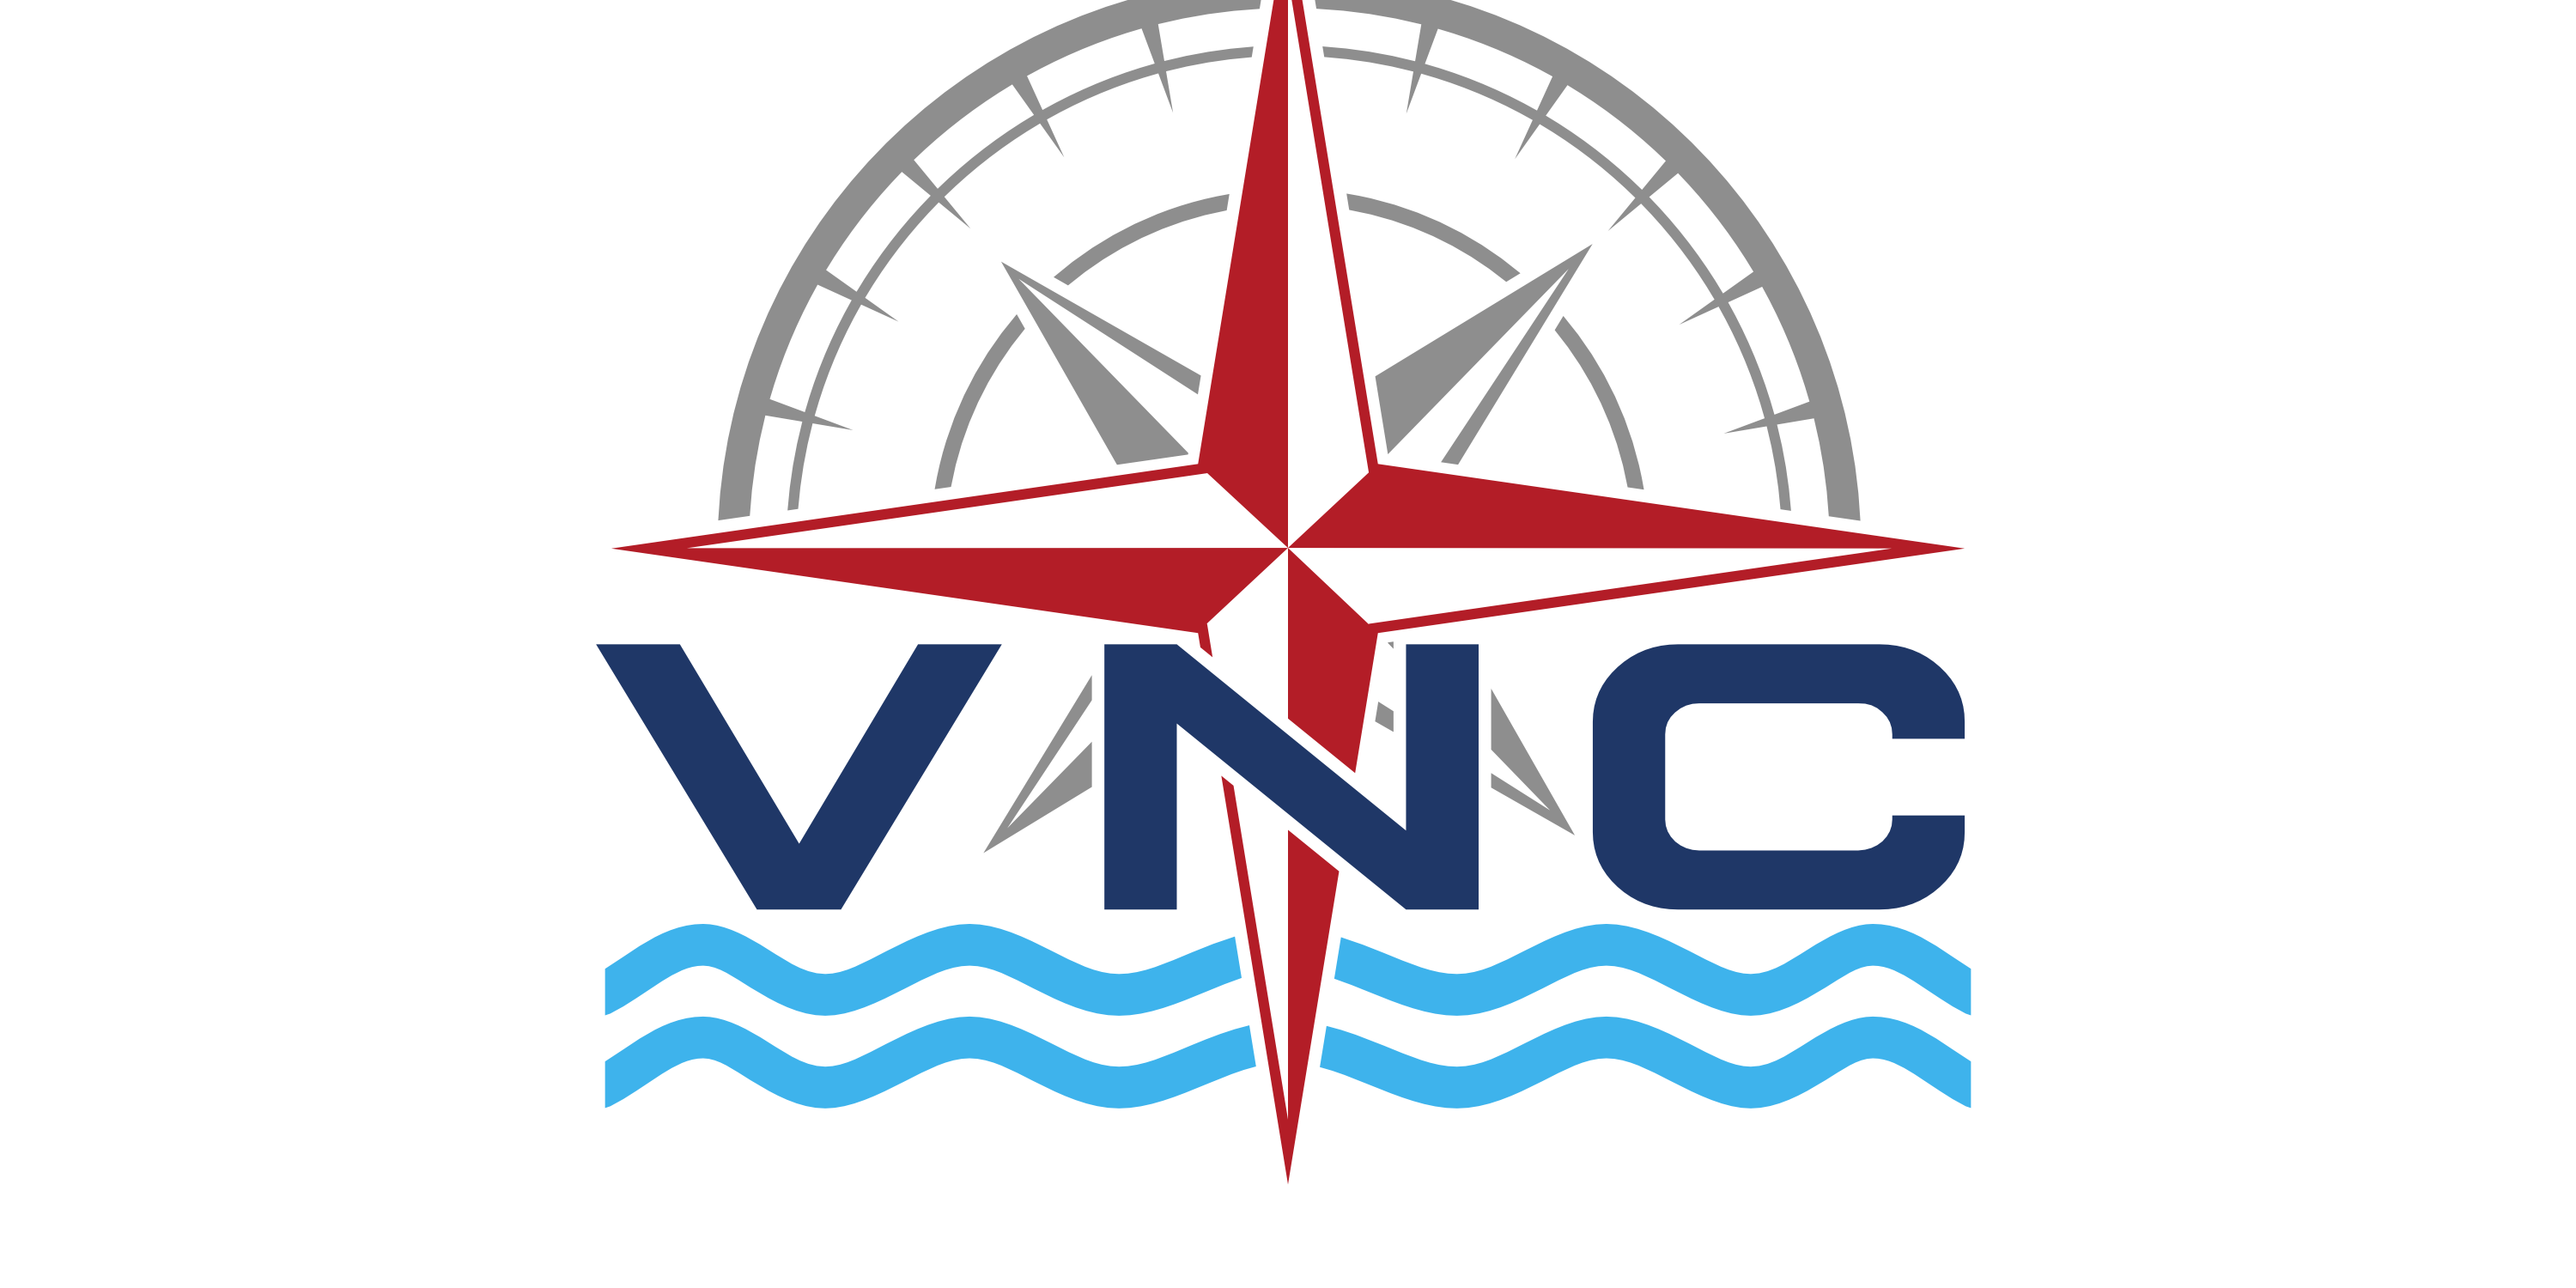 Veterans Navigation Center